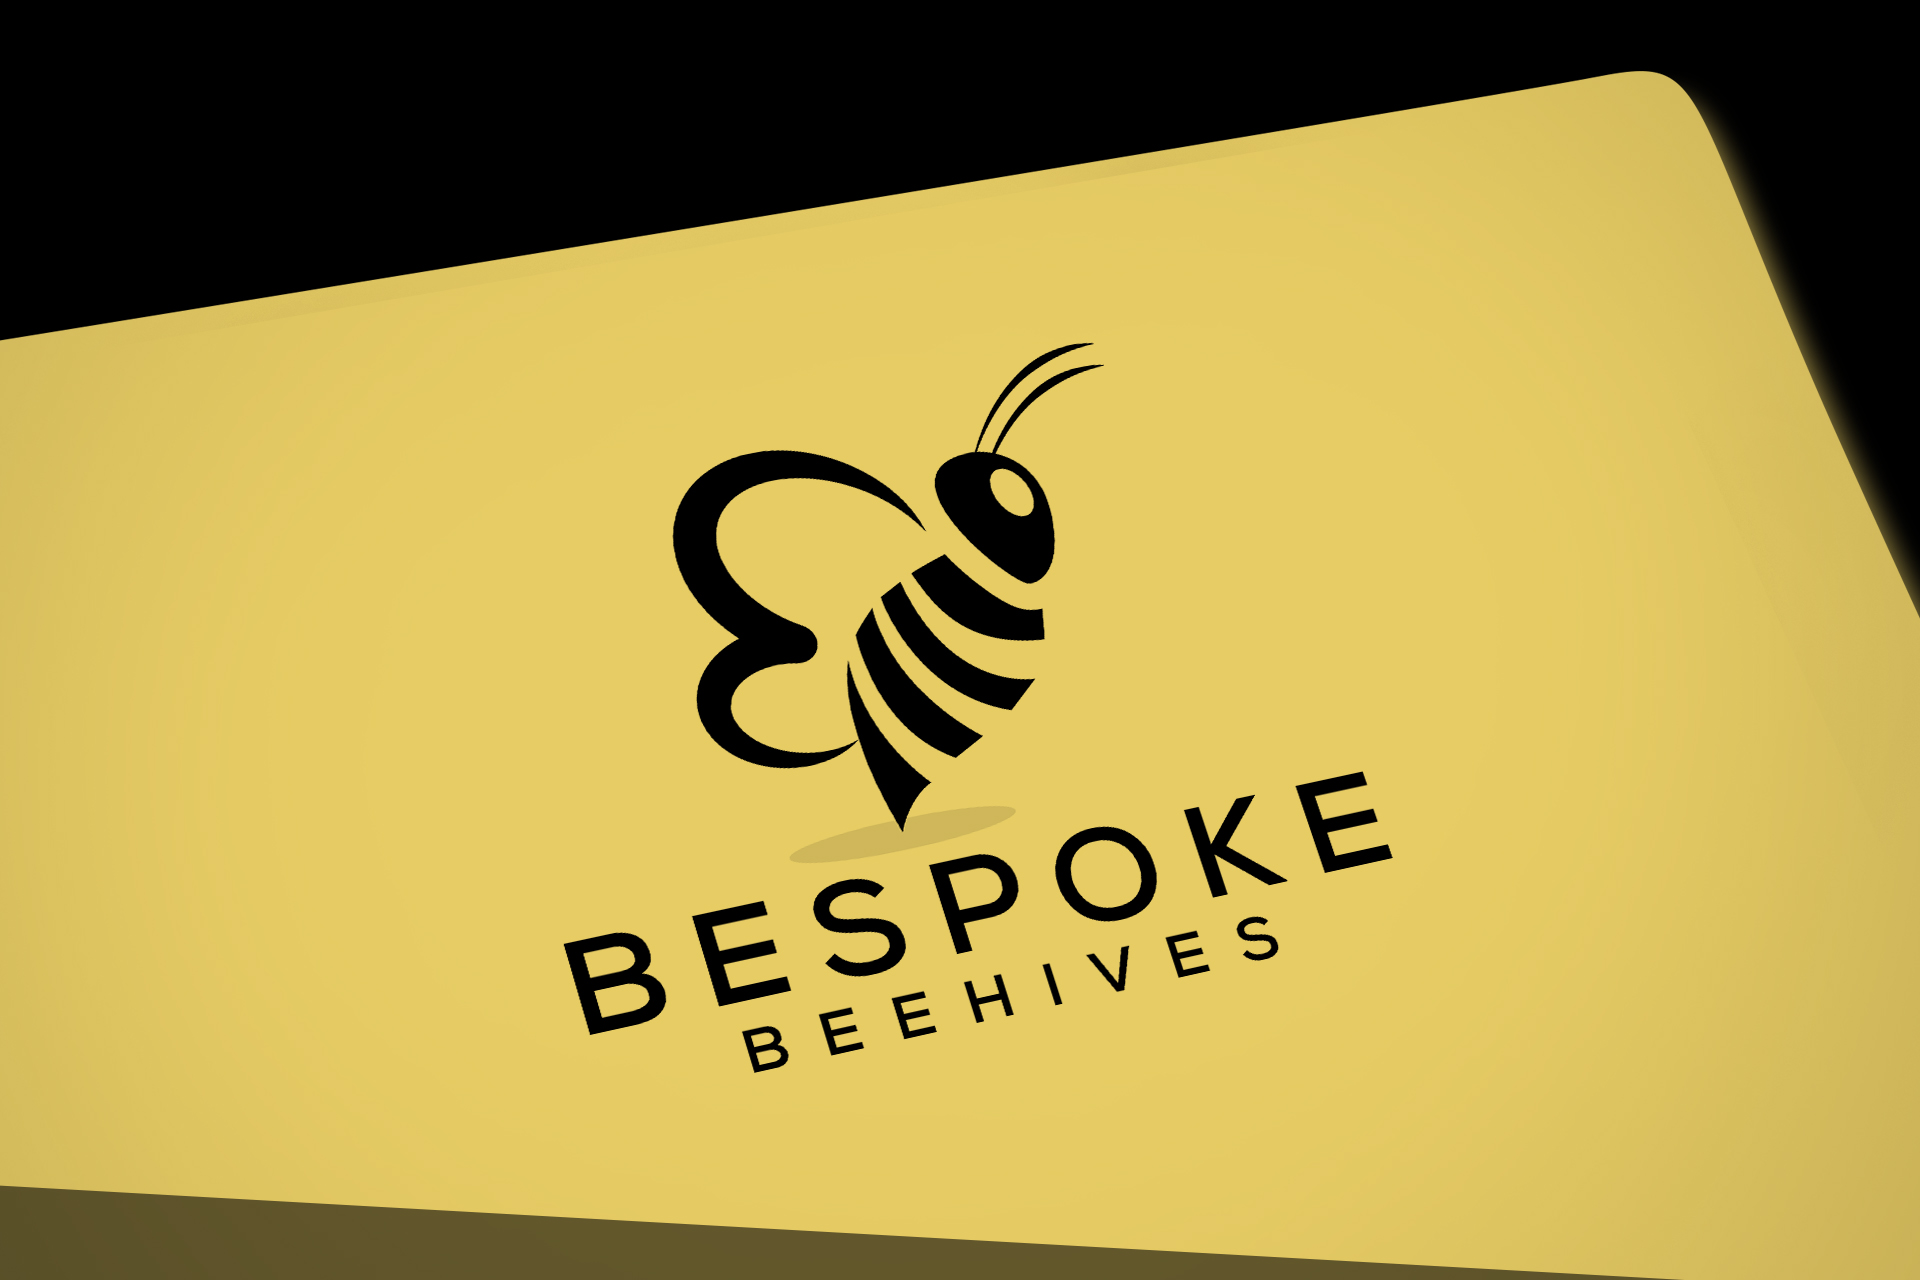 Bespoke Beehives Design #2